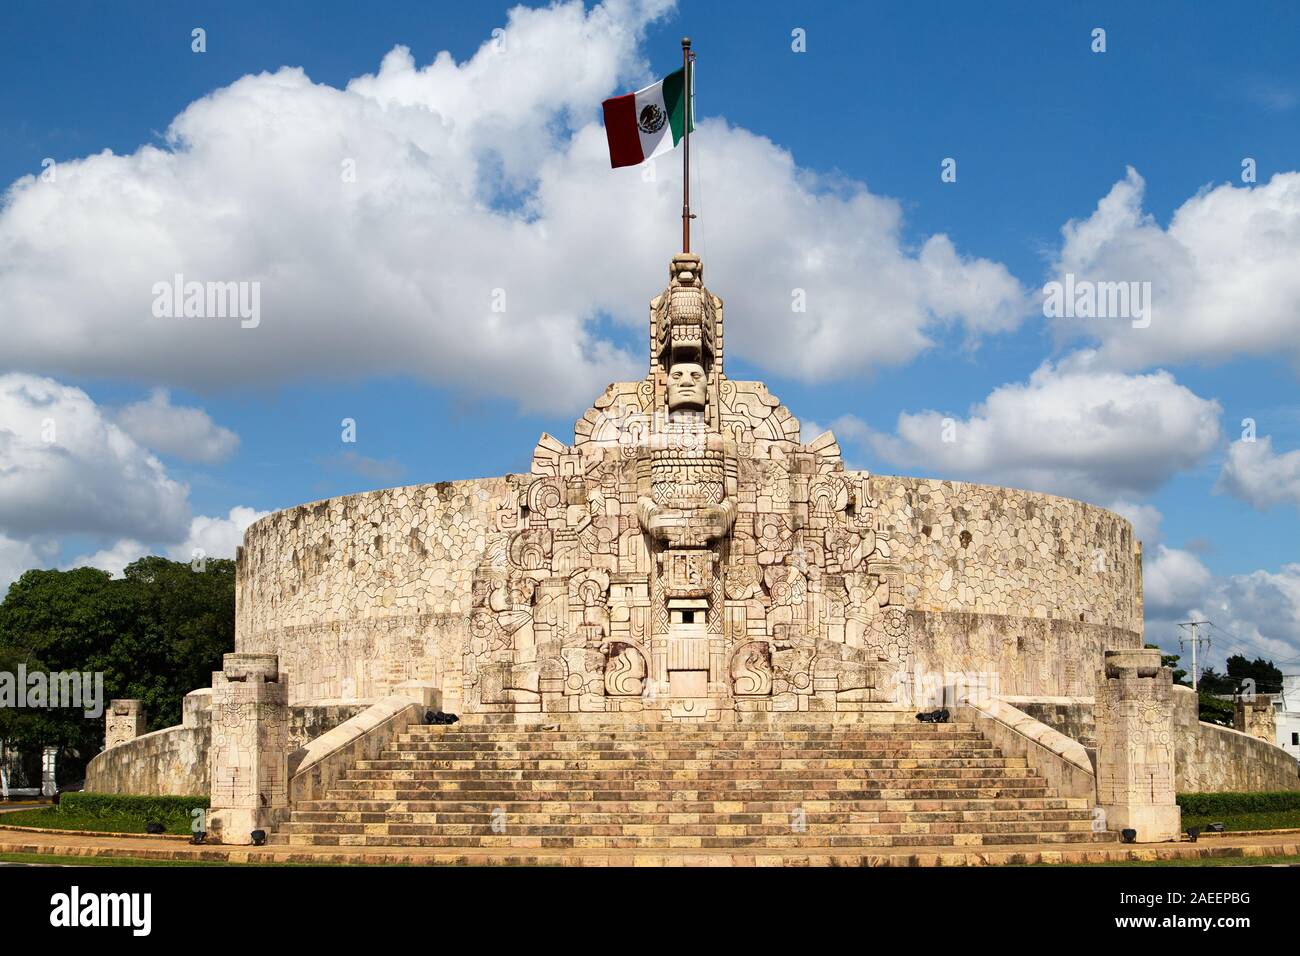 Monument to the Fatherland(onumento a la Patria) located on Paseo de Montejo was made by a sculptor Romulo Rozo in 1956, Merida, Yucatan, Mexico. Stock Photo